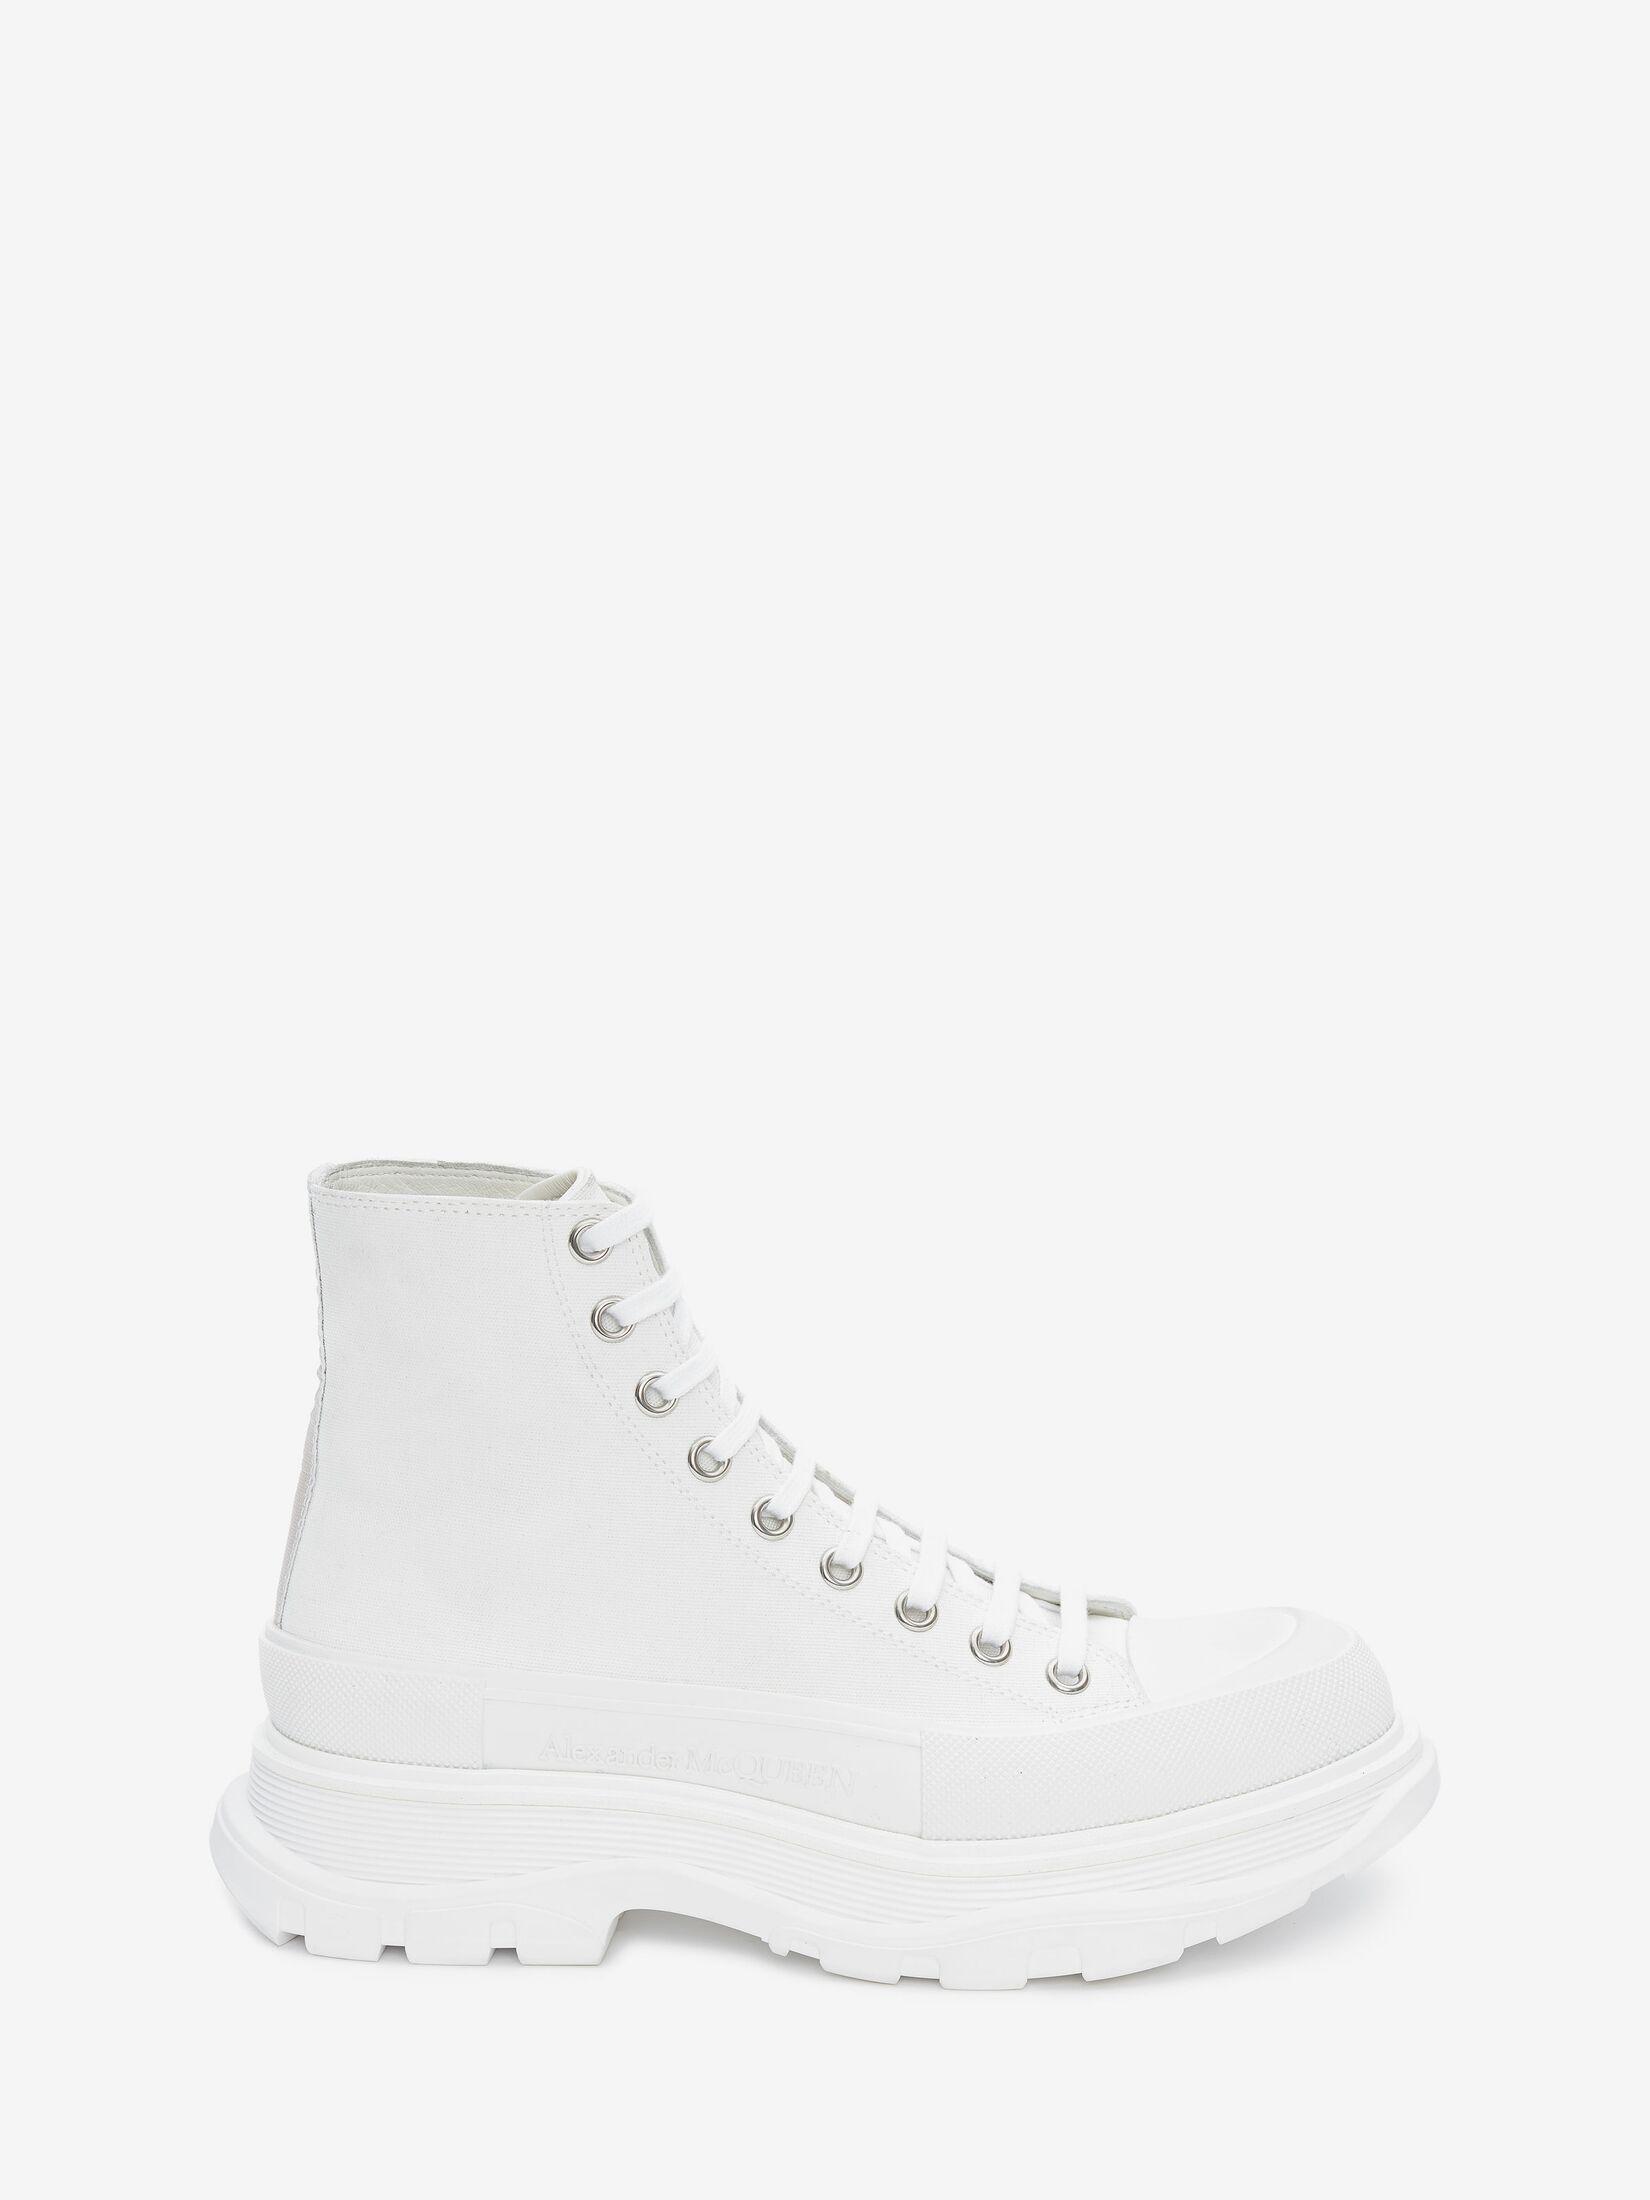 Alexander McQueen Canvas Tread Slick Boots in White for Men - Lyst